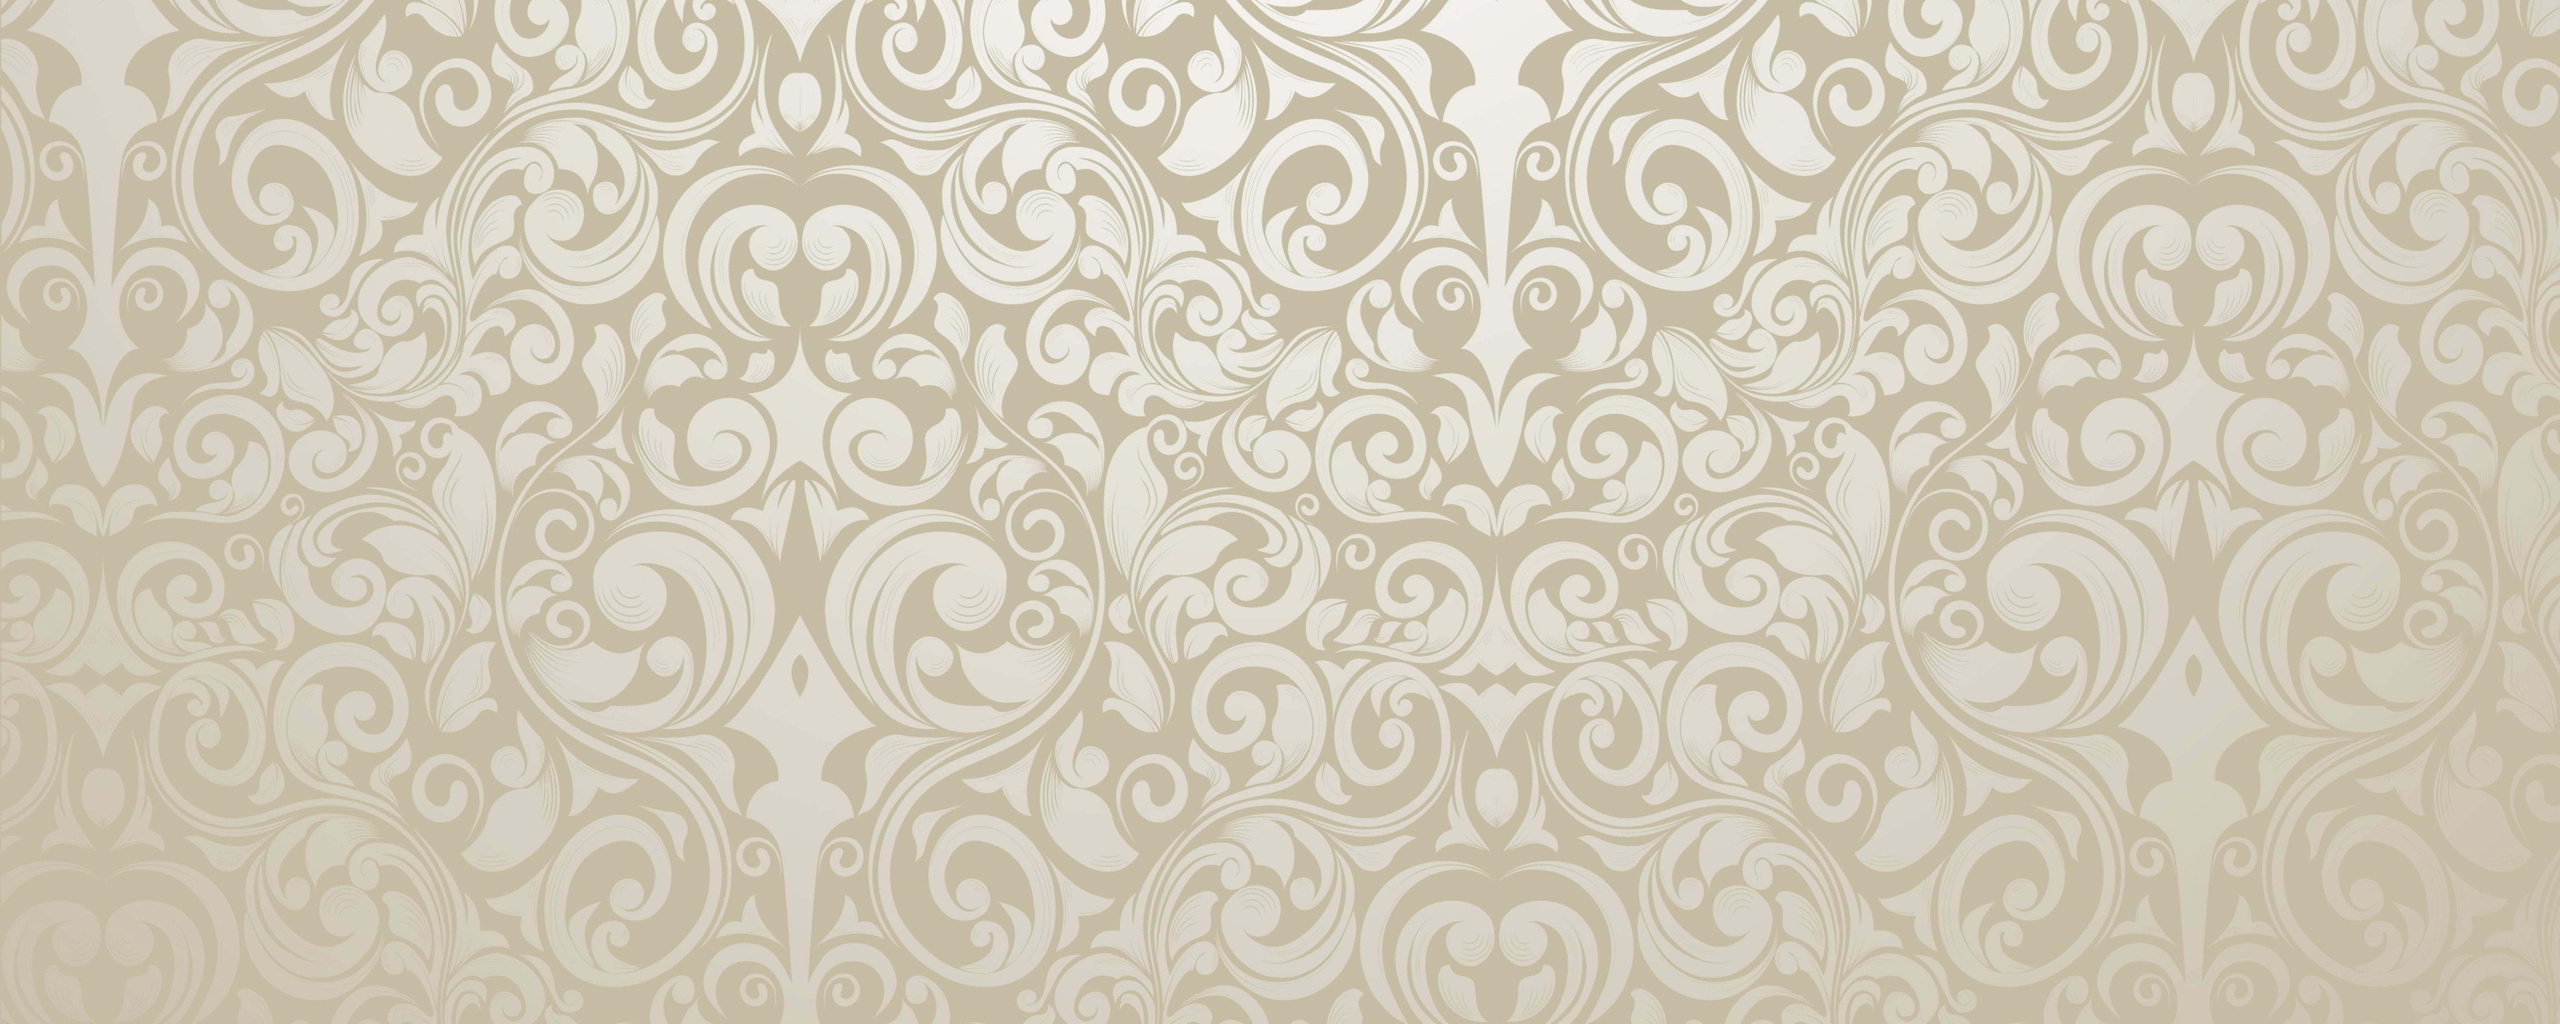 Wallpapers Prints Patterns